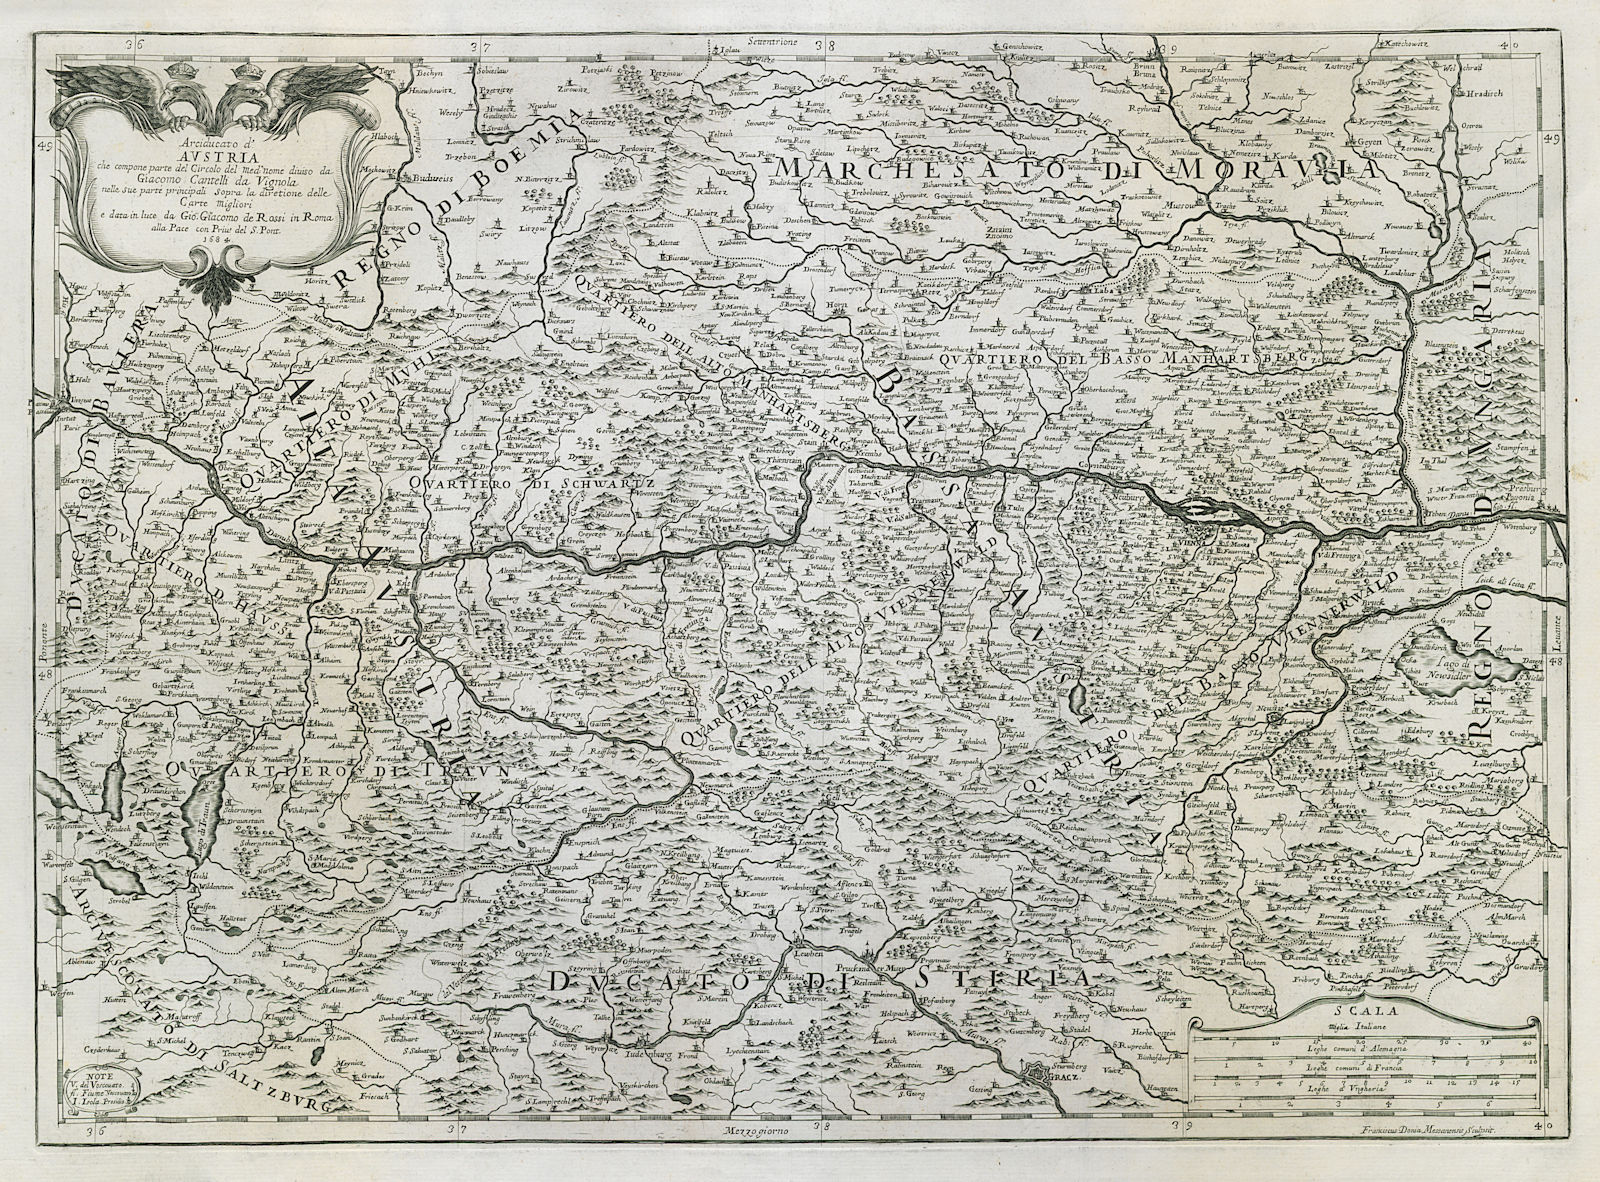 Arciducato d'Austria. Eastern Austria. Archduchy of Austria. DE ROSSI 1684 map